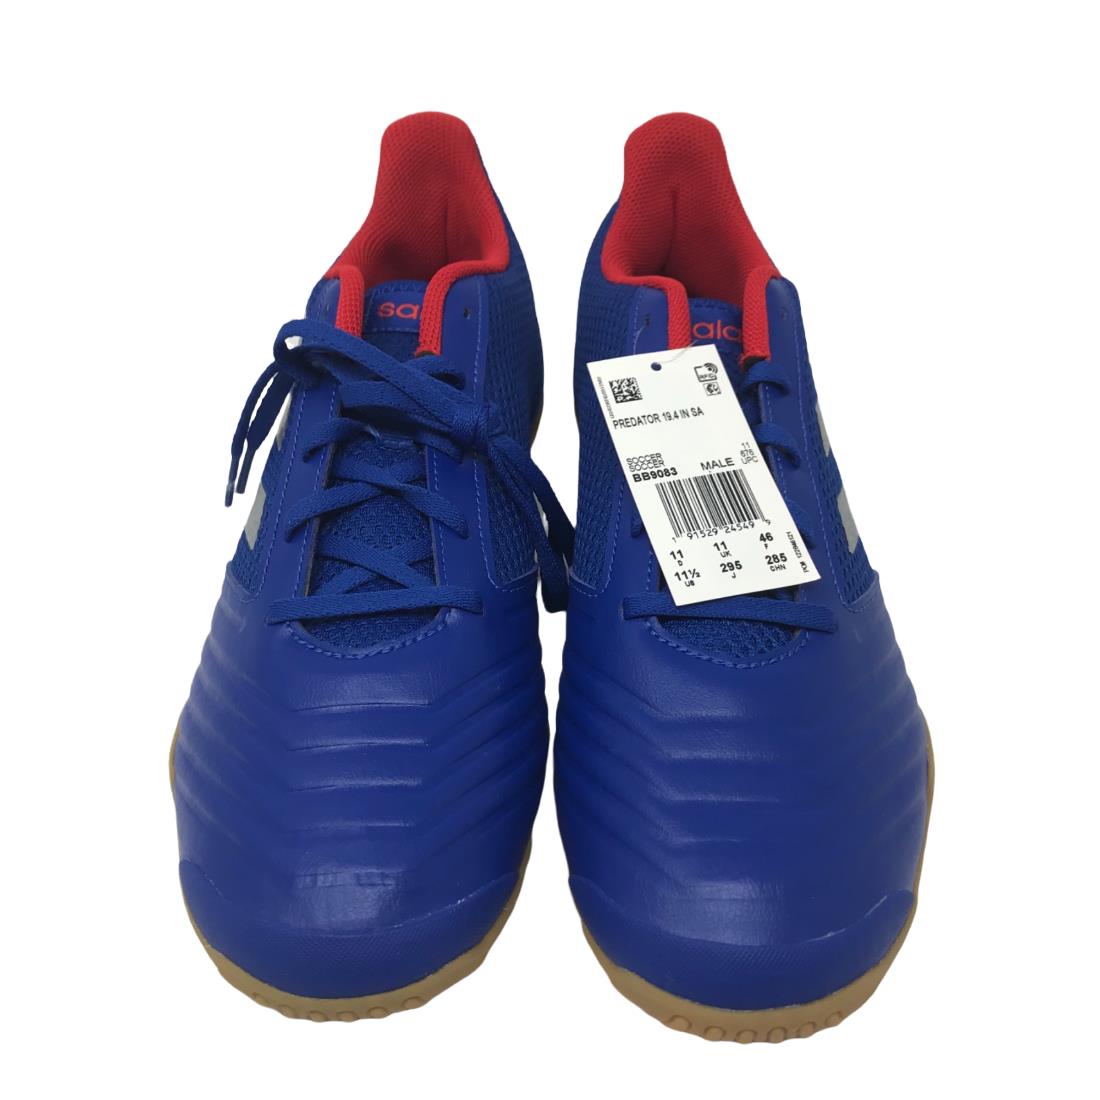 Adidas Men`s Predator 19.4 Soccer Shoe Size 11.5M - Blue/Red